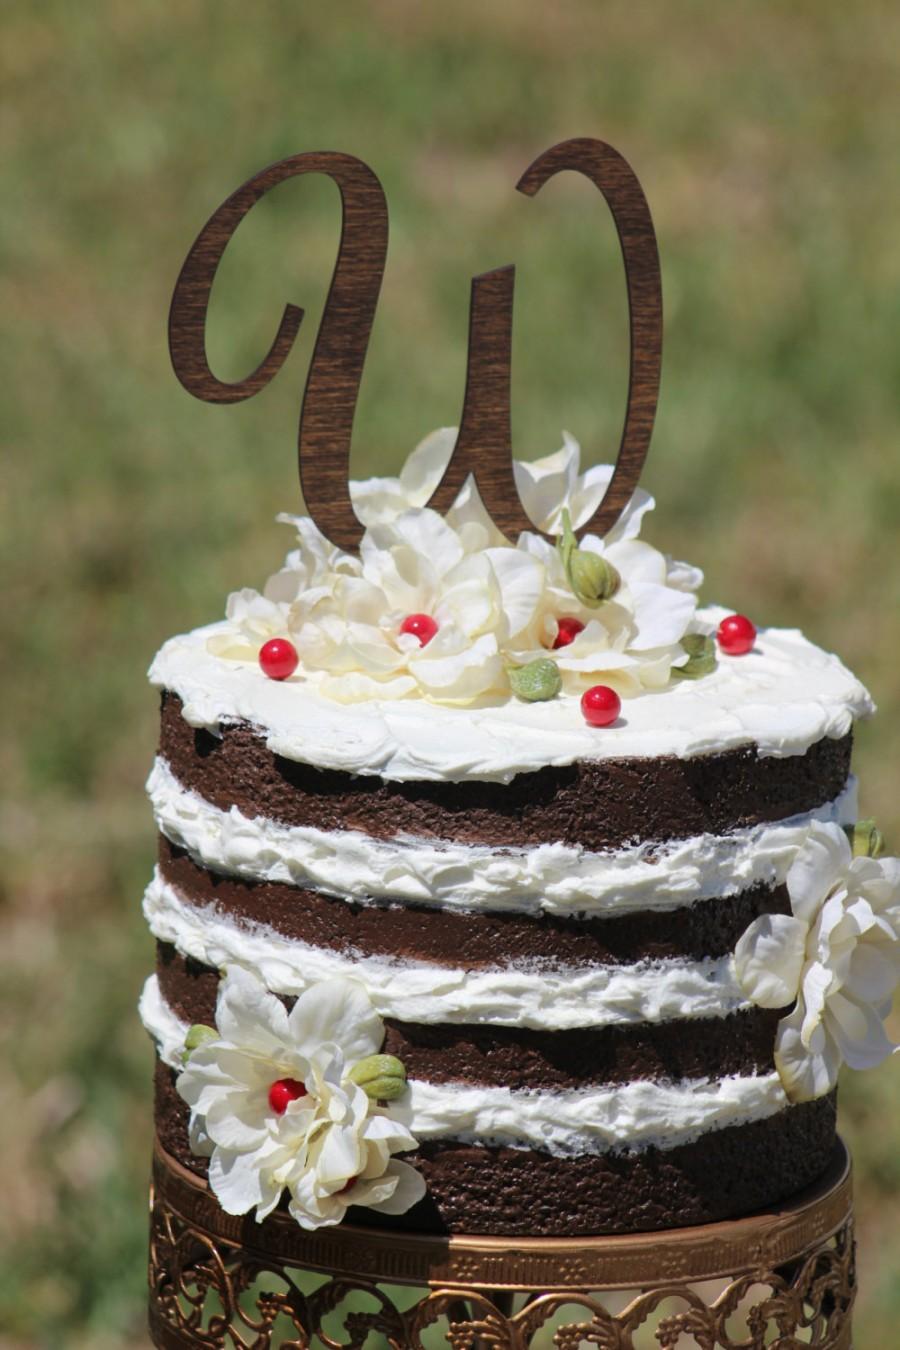 زفاف - Monogram Wedding Cake topper - Wooden cake topper - Personalized Cake topper